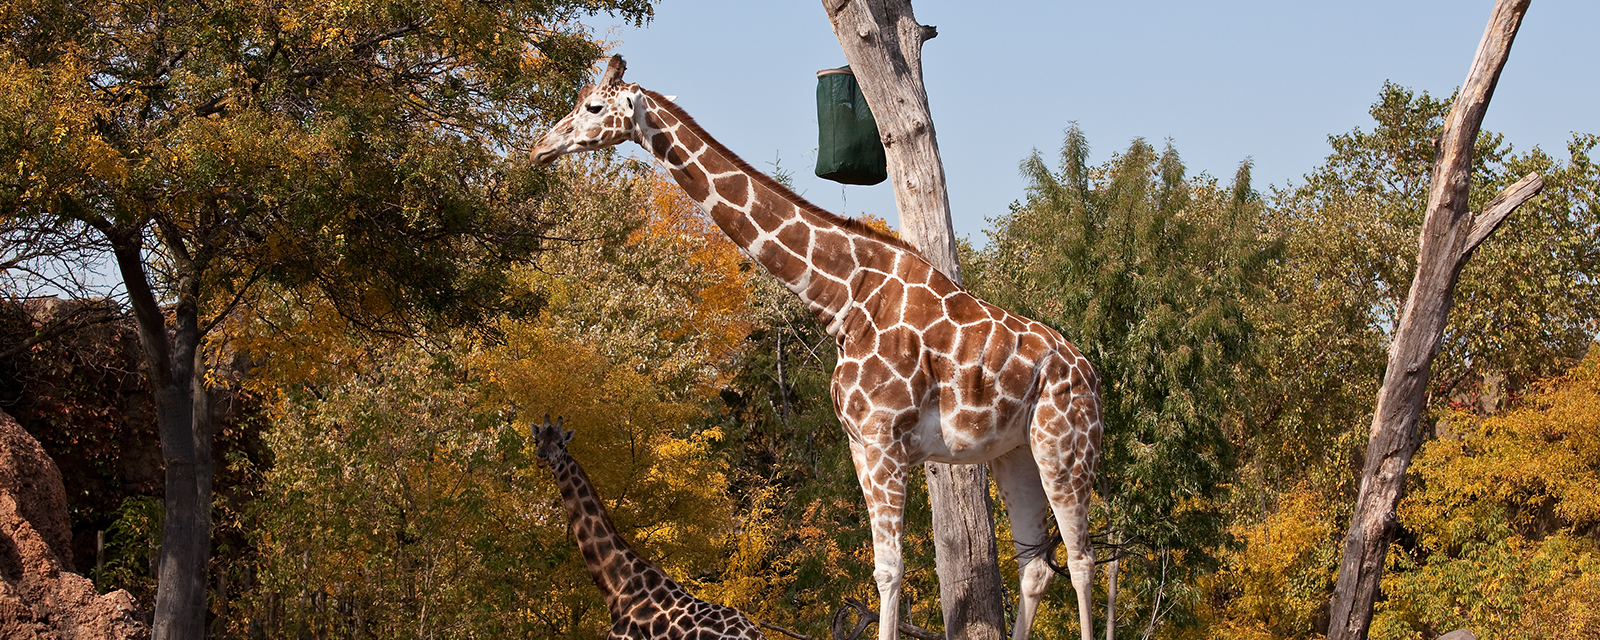 Animals & Gardens - Lincoln Park Zoo